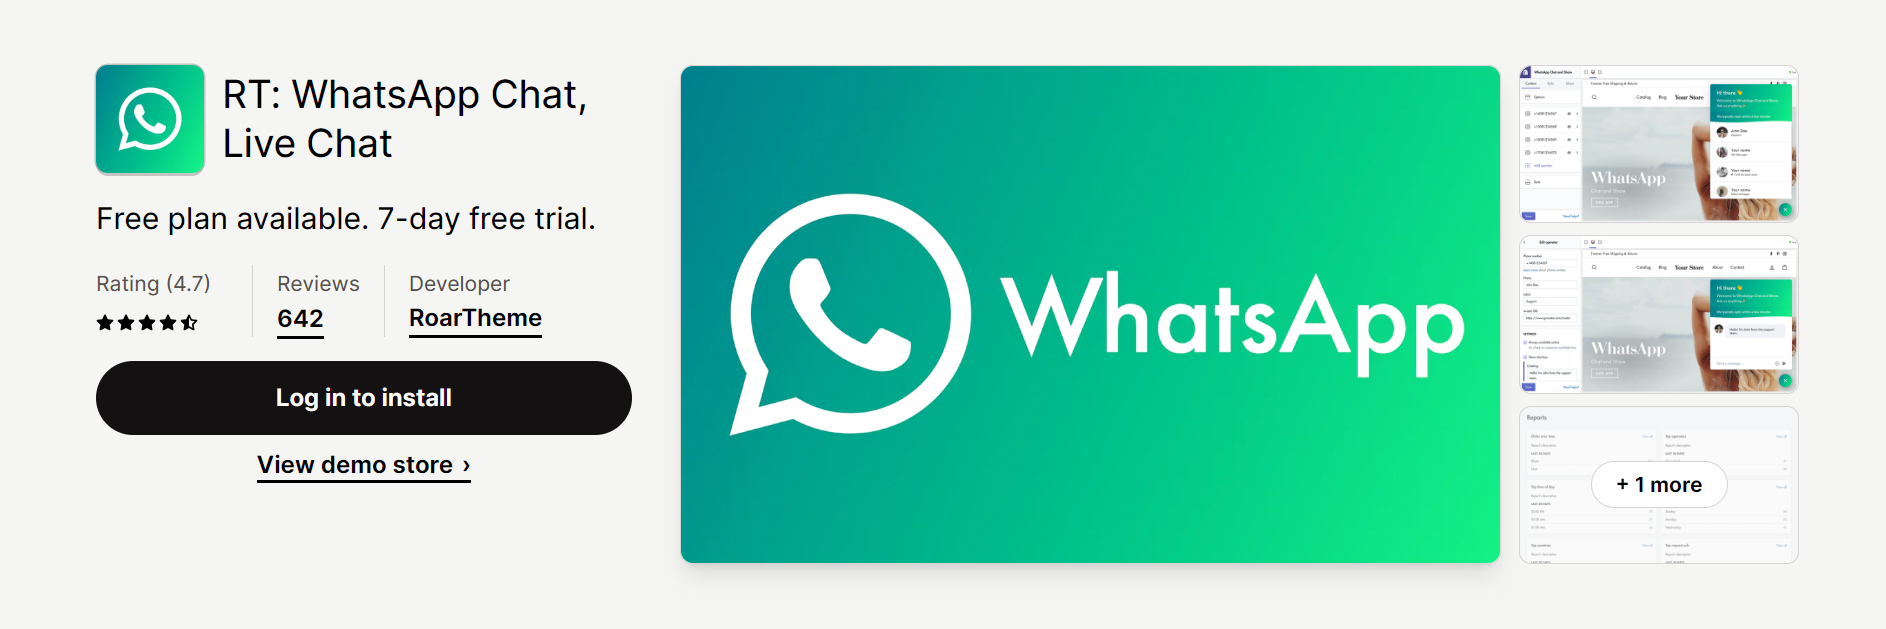 RT: WhatsApp Chat, Live Chat